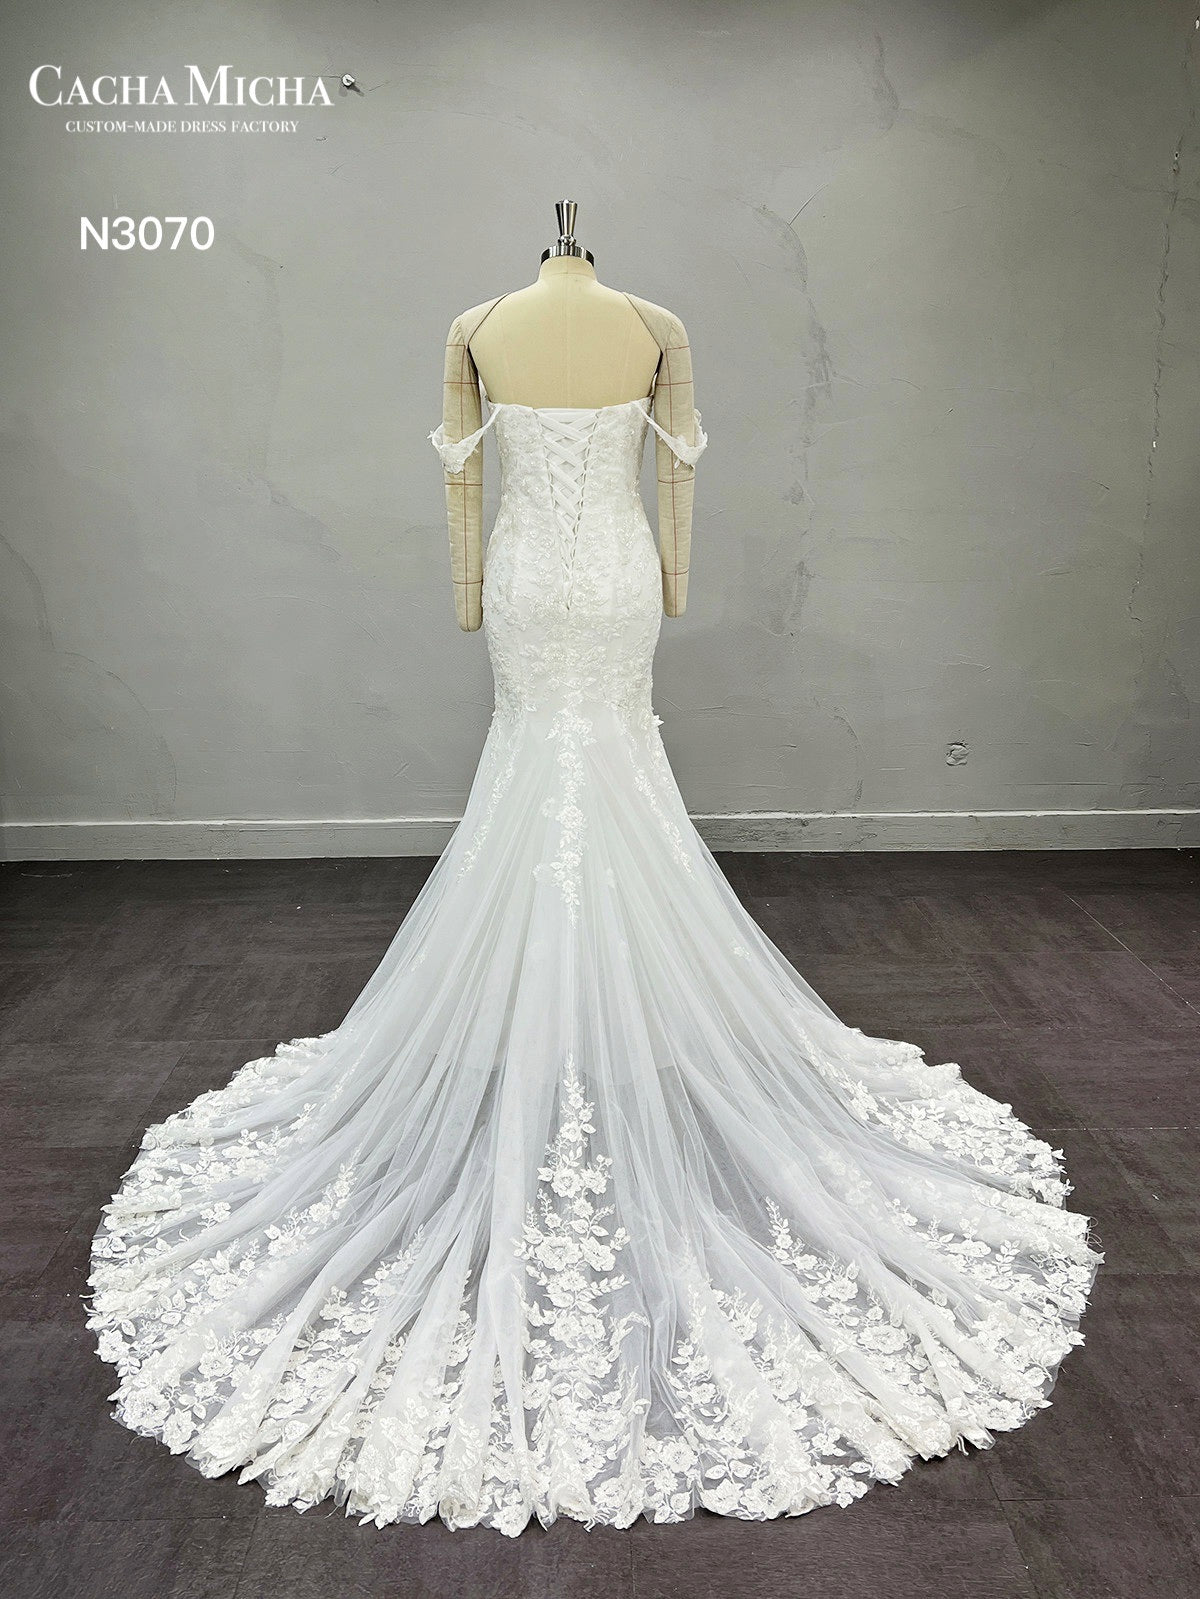 Heavy Beaded Lace Mermaid Wedding Dress N3070